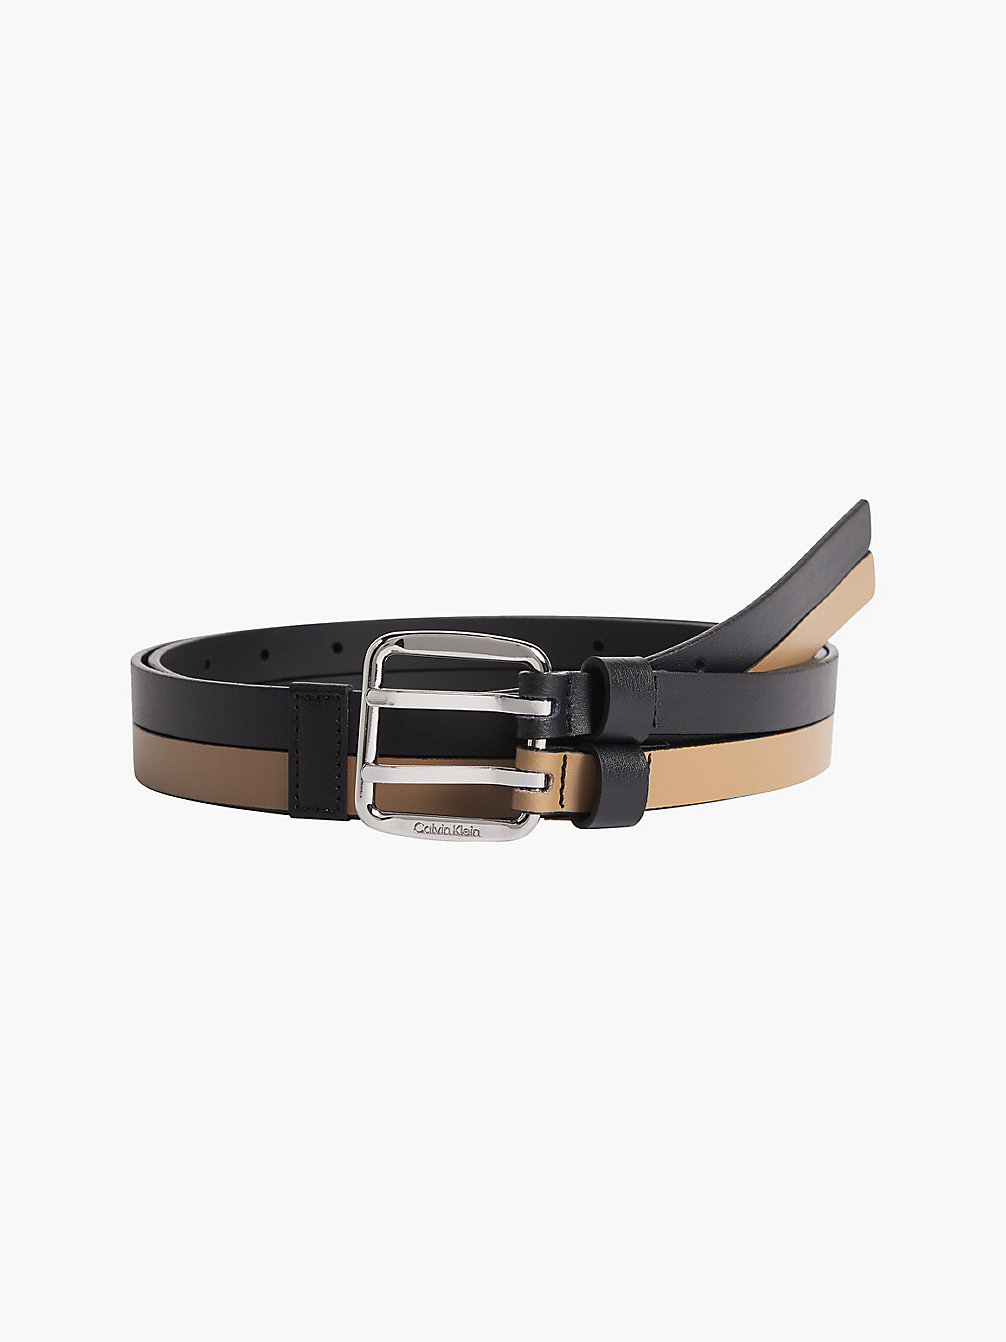 BLACK/SAFARI CANVAS Leather Unisex Double Belt undefined unisex Calvin Klein